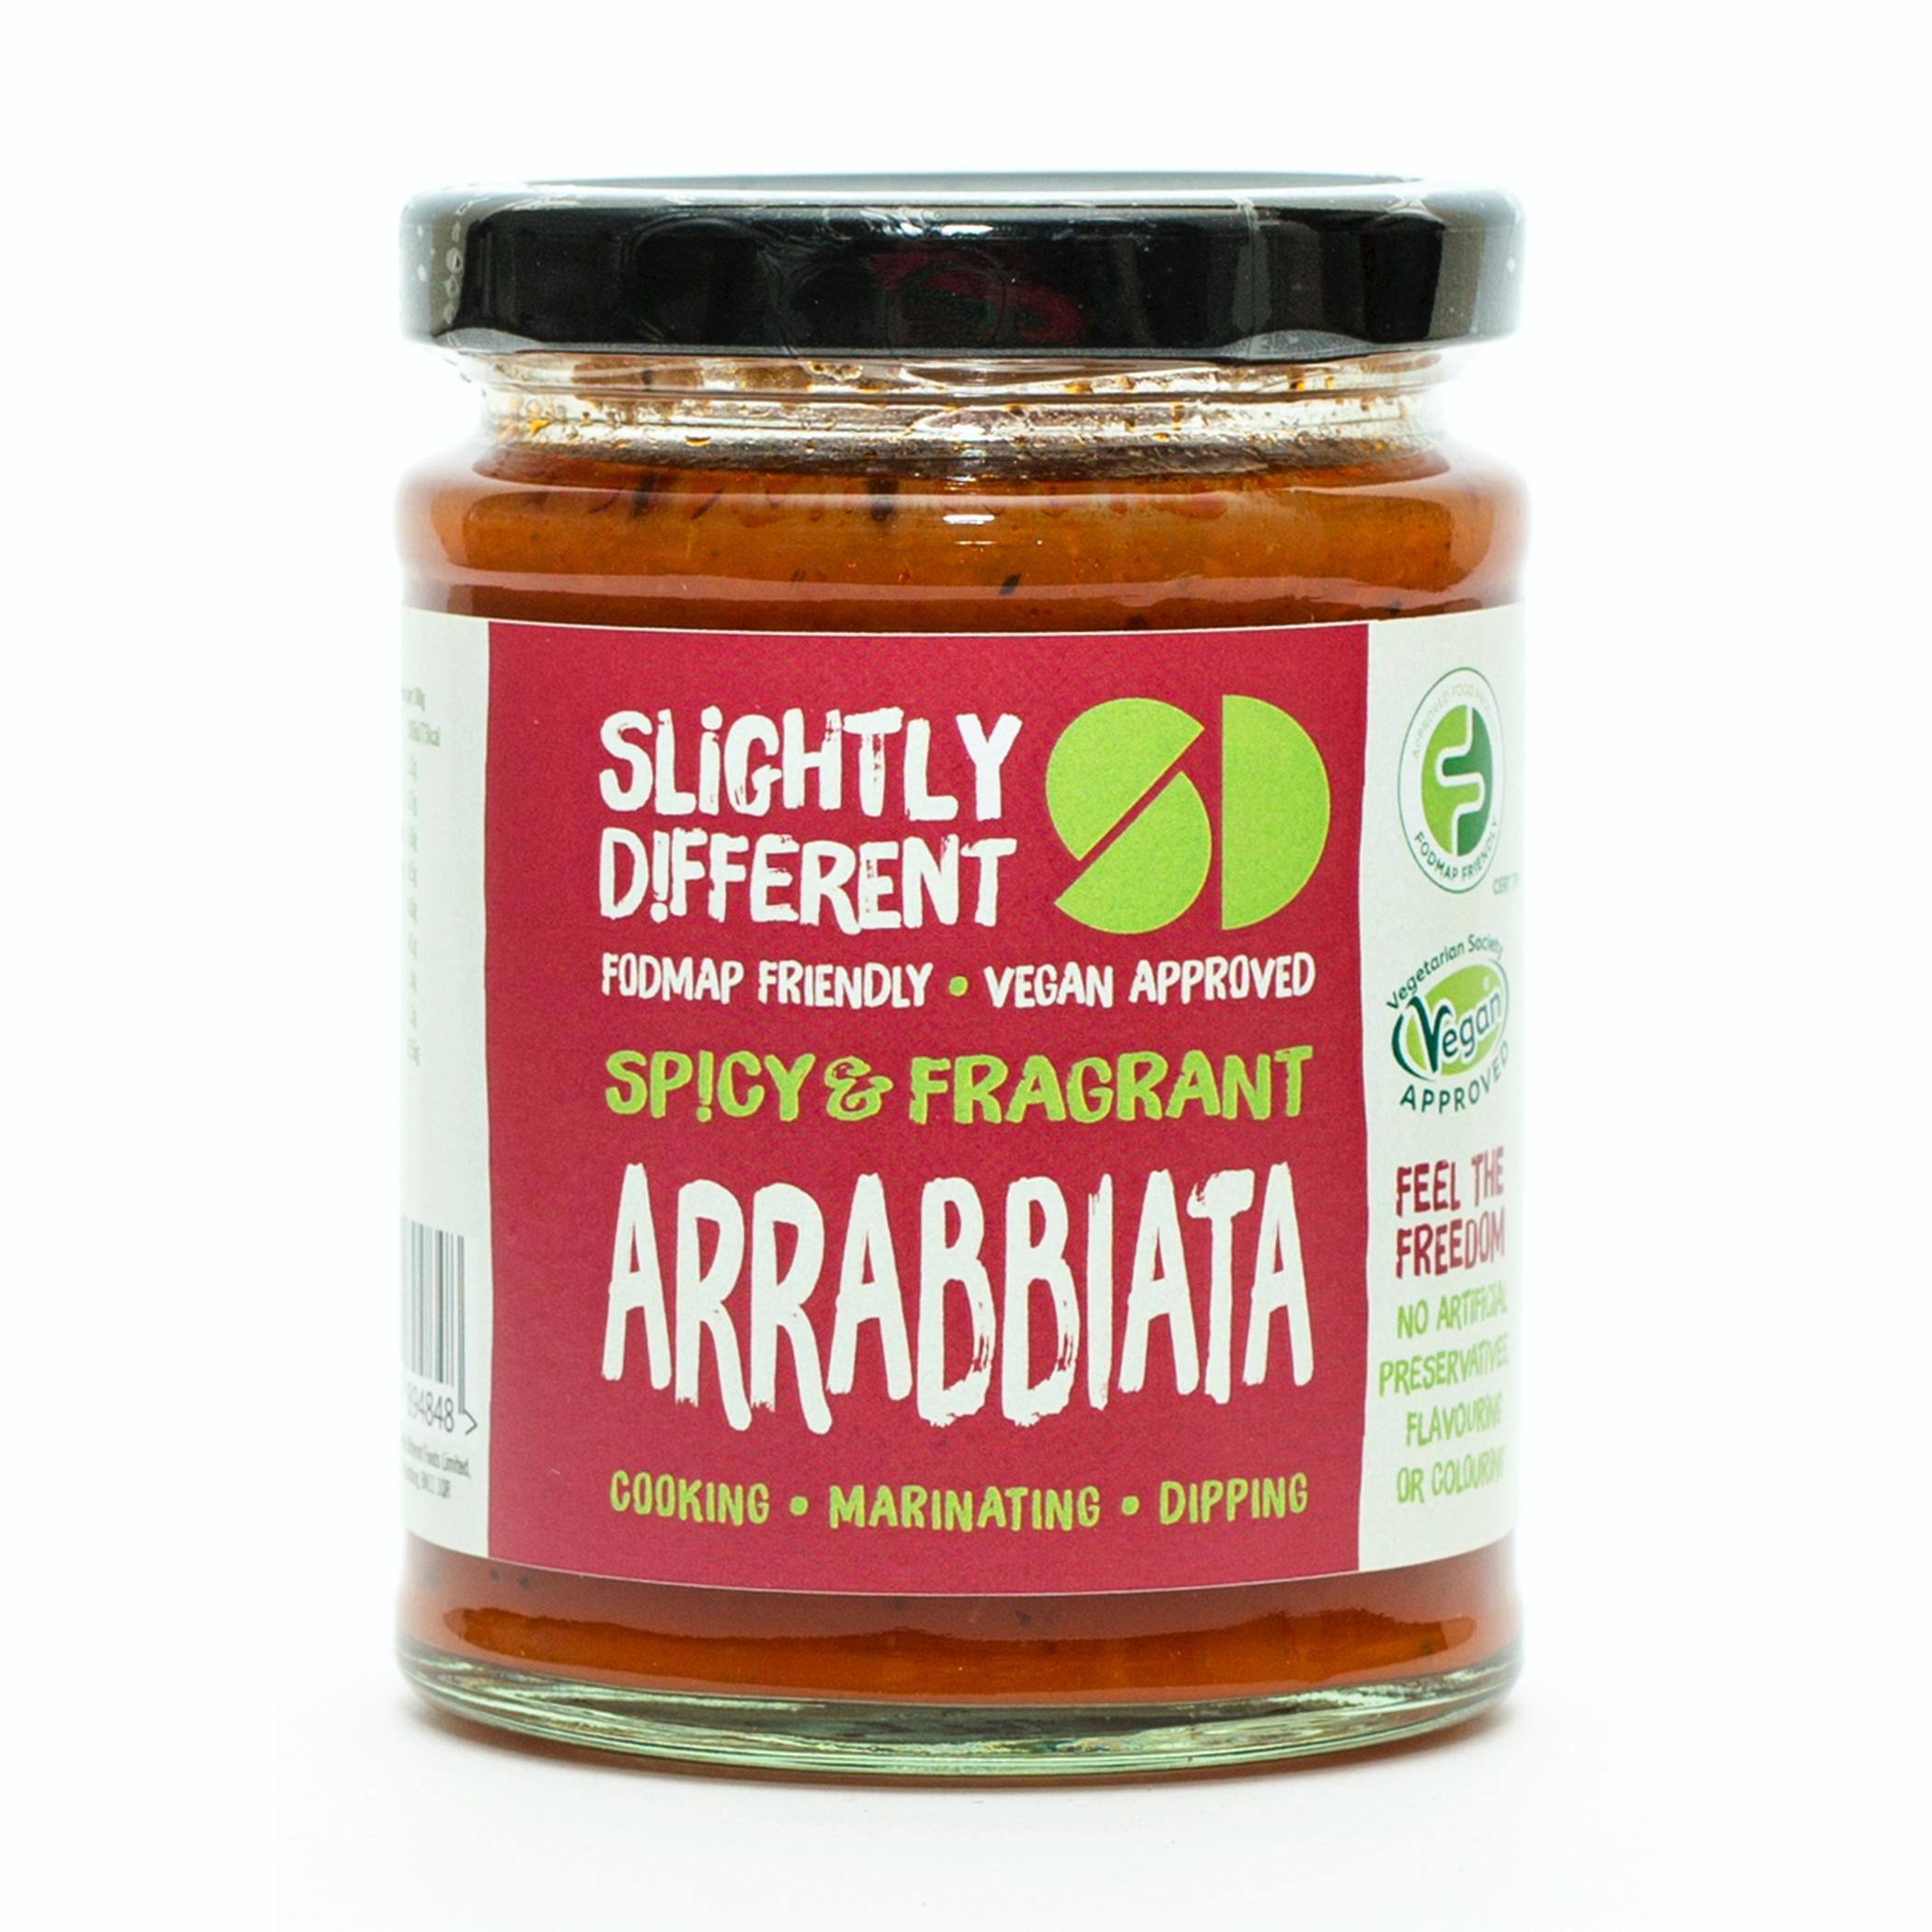 A jar of Slightly Different's Arrabbiata Sauce